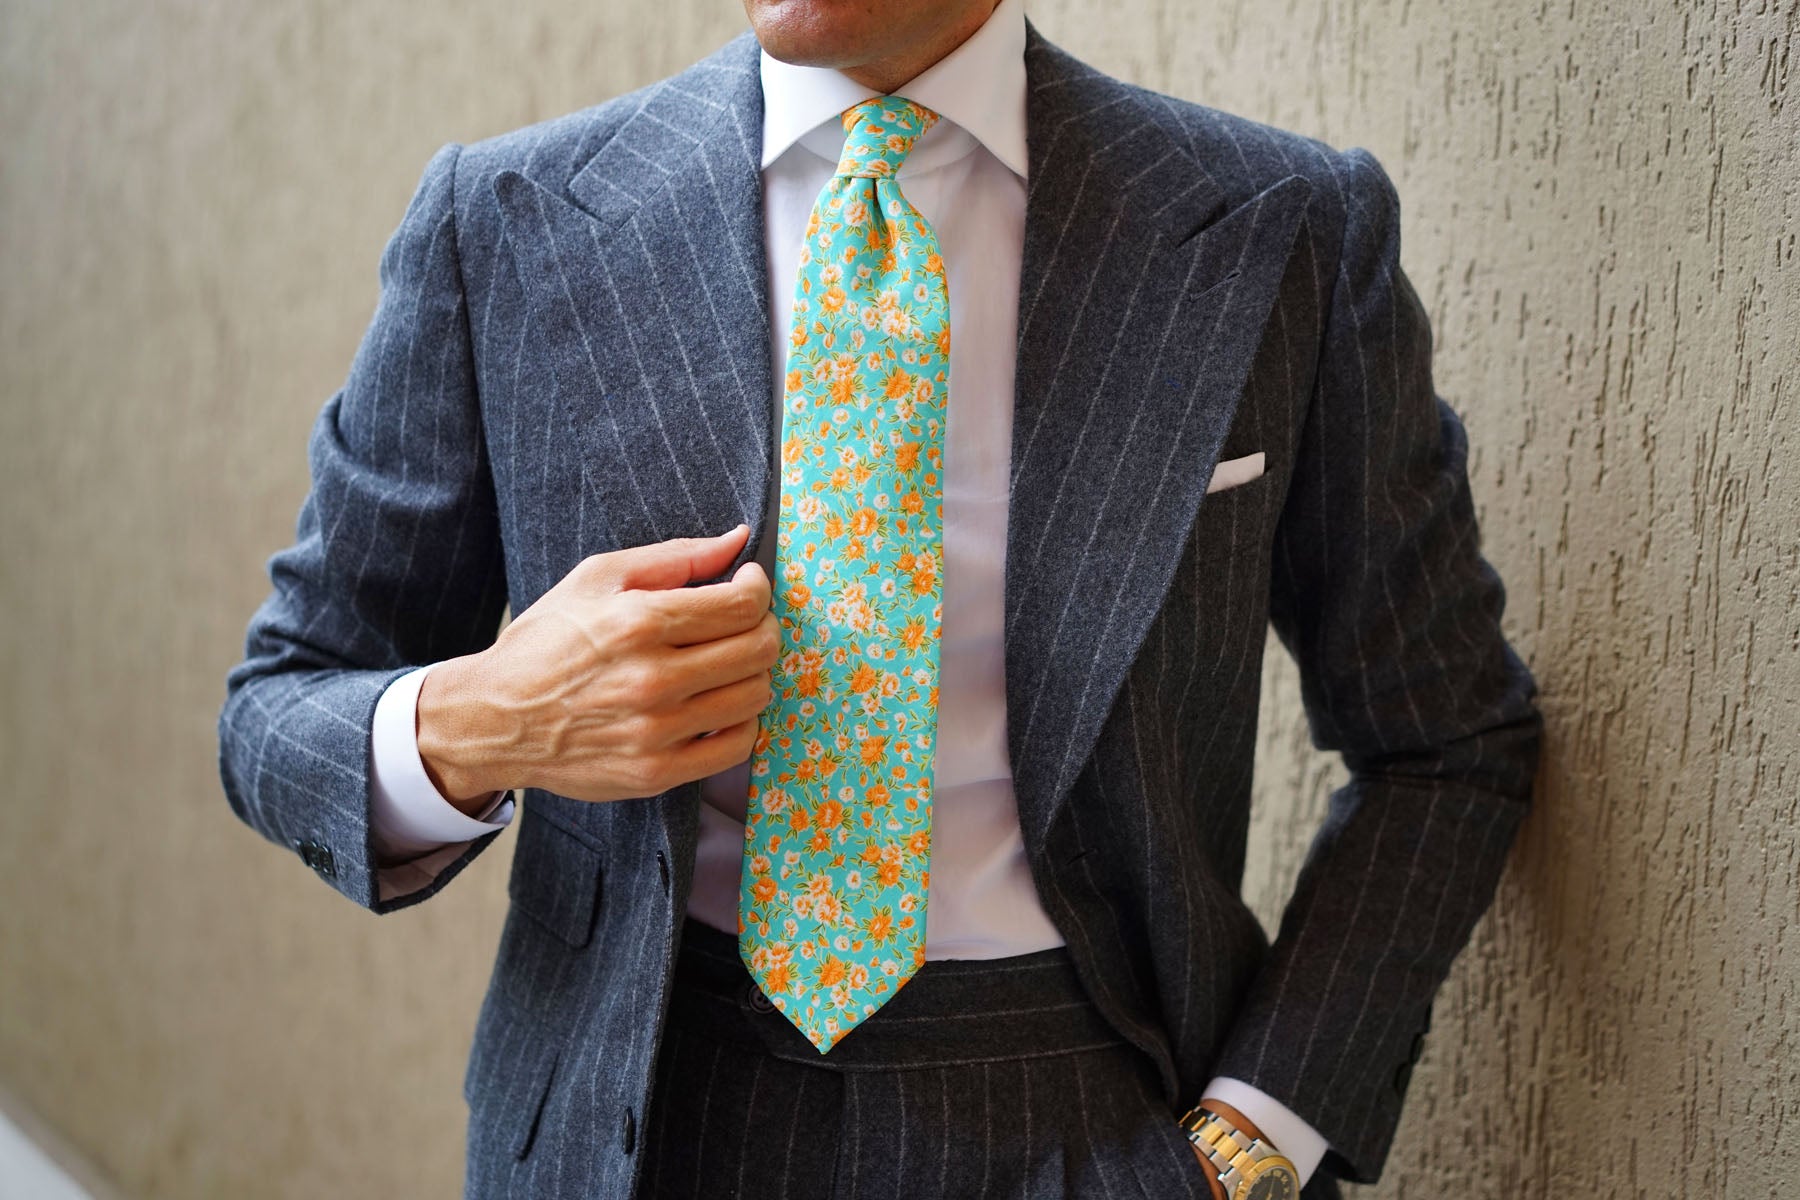 Monaco Floral Necktie | Turquoise Flower Tie | Wedding Ties for Men AU ...